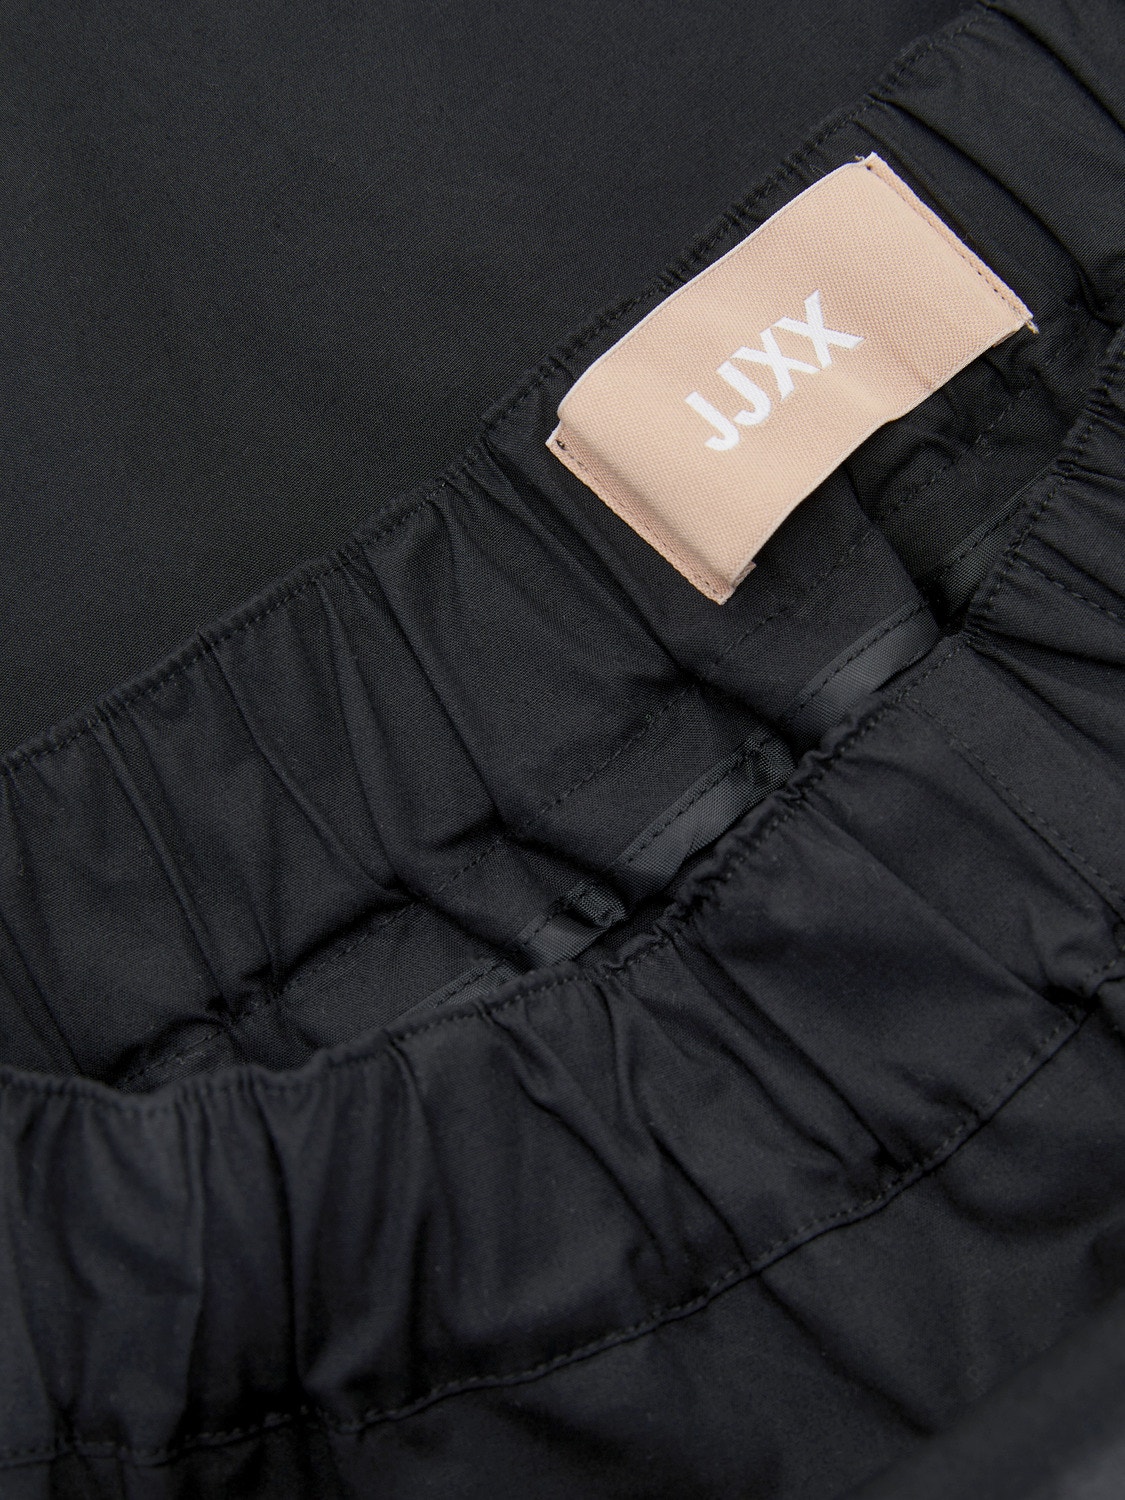 JXYOKO Cargo trousers, Black